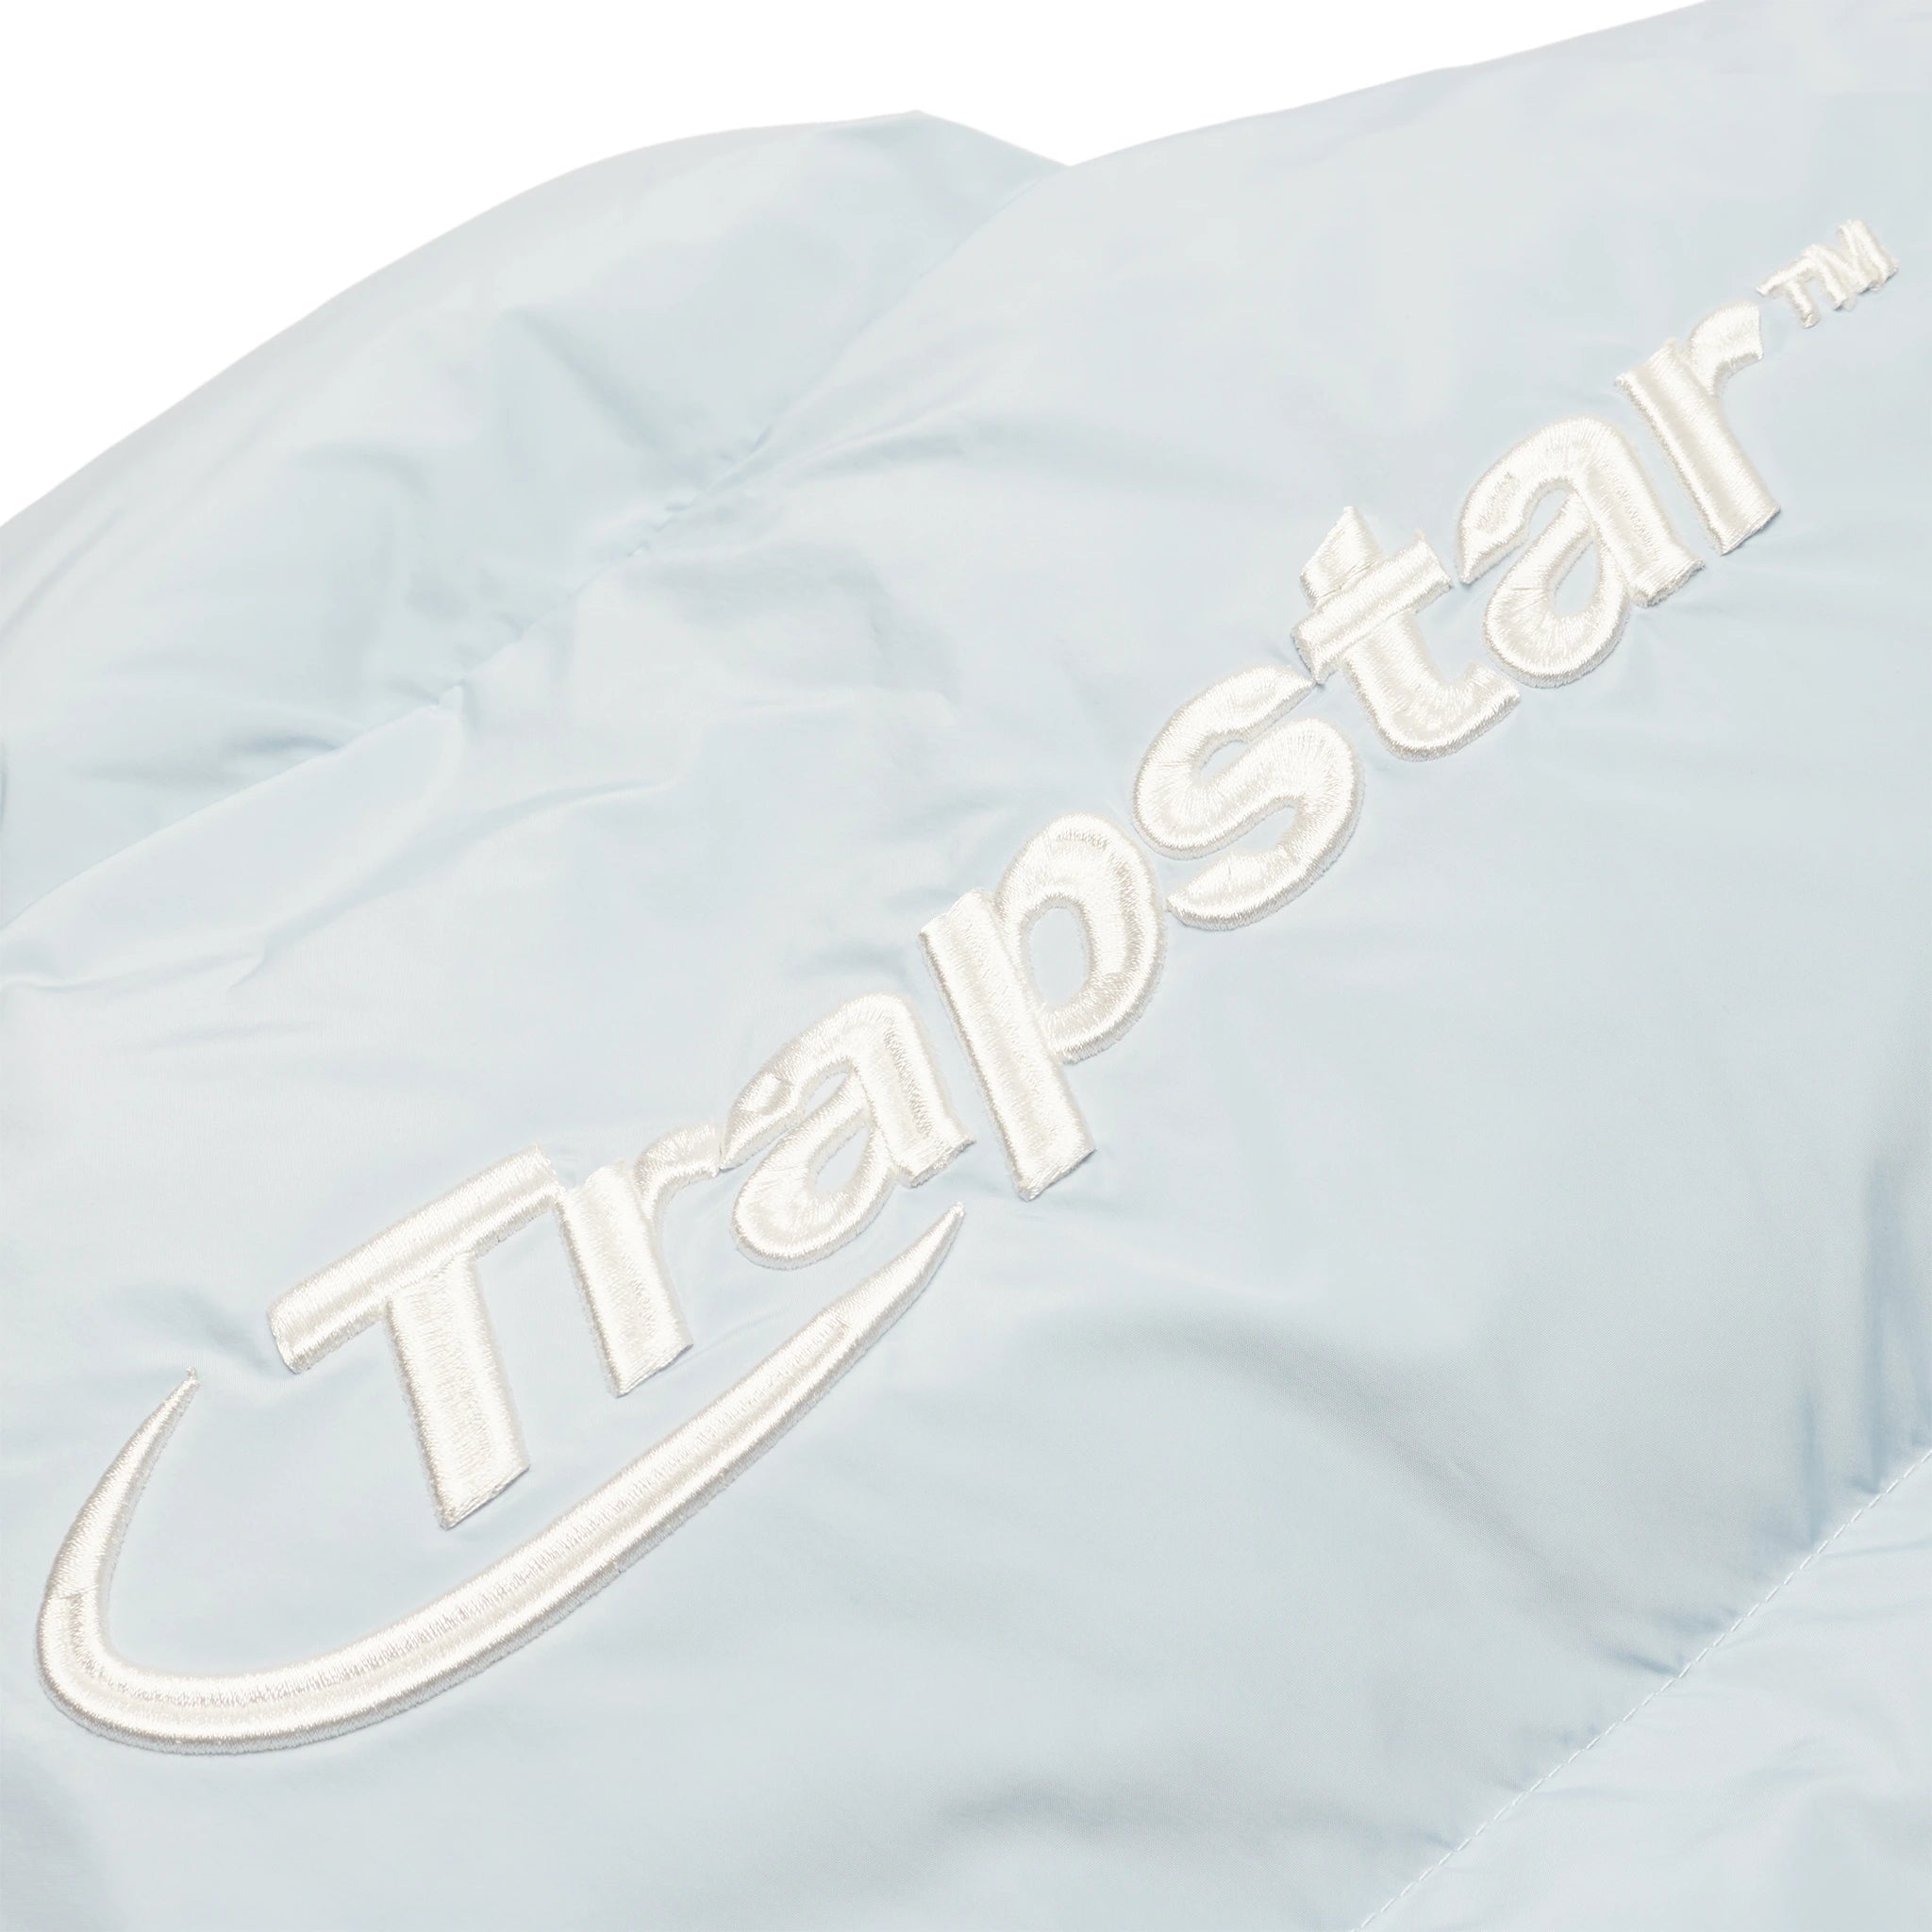 Trapstar Womens Hyperdrive Ice Blue Puffer Jacket